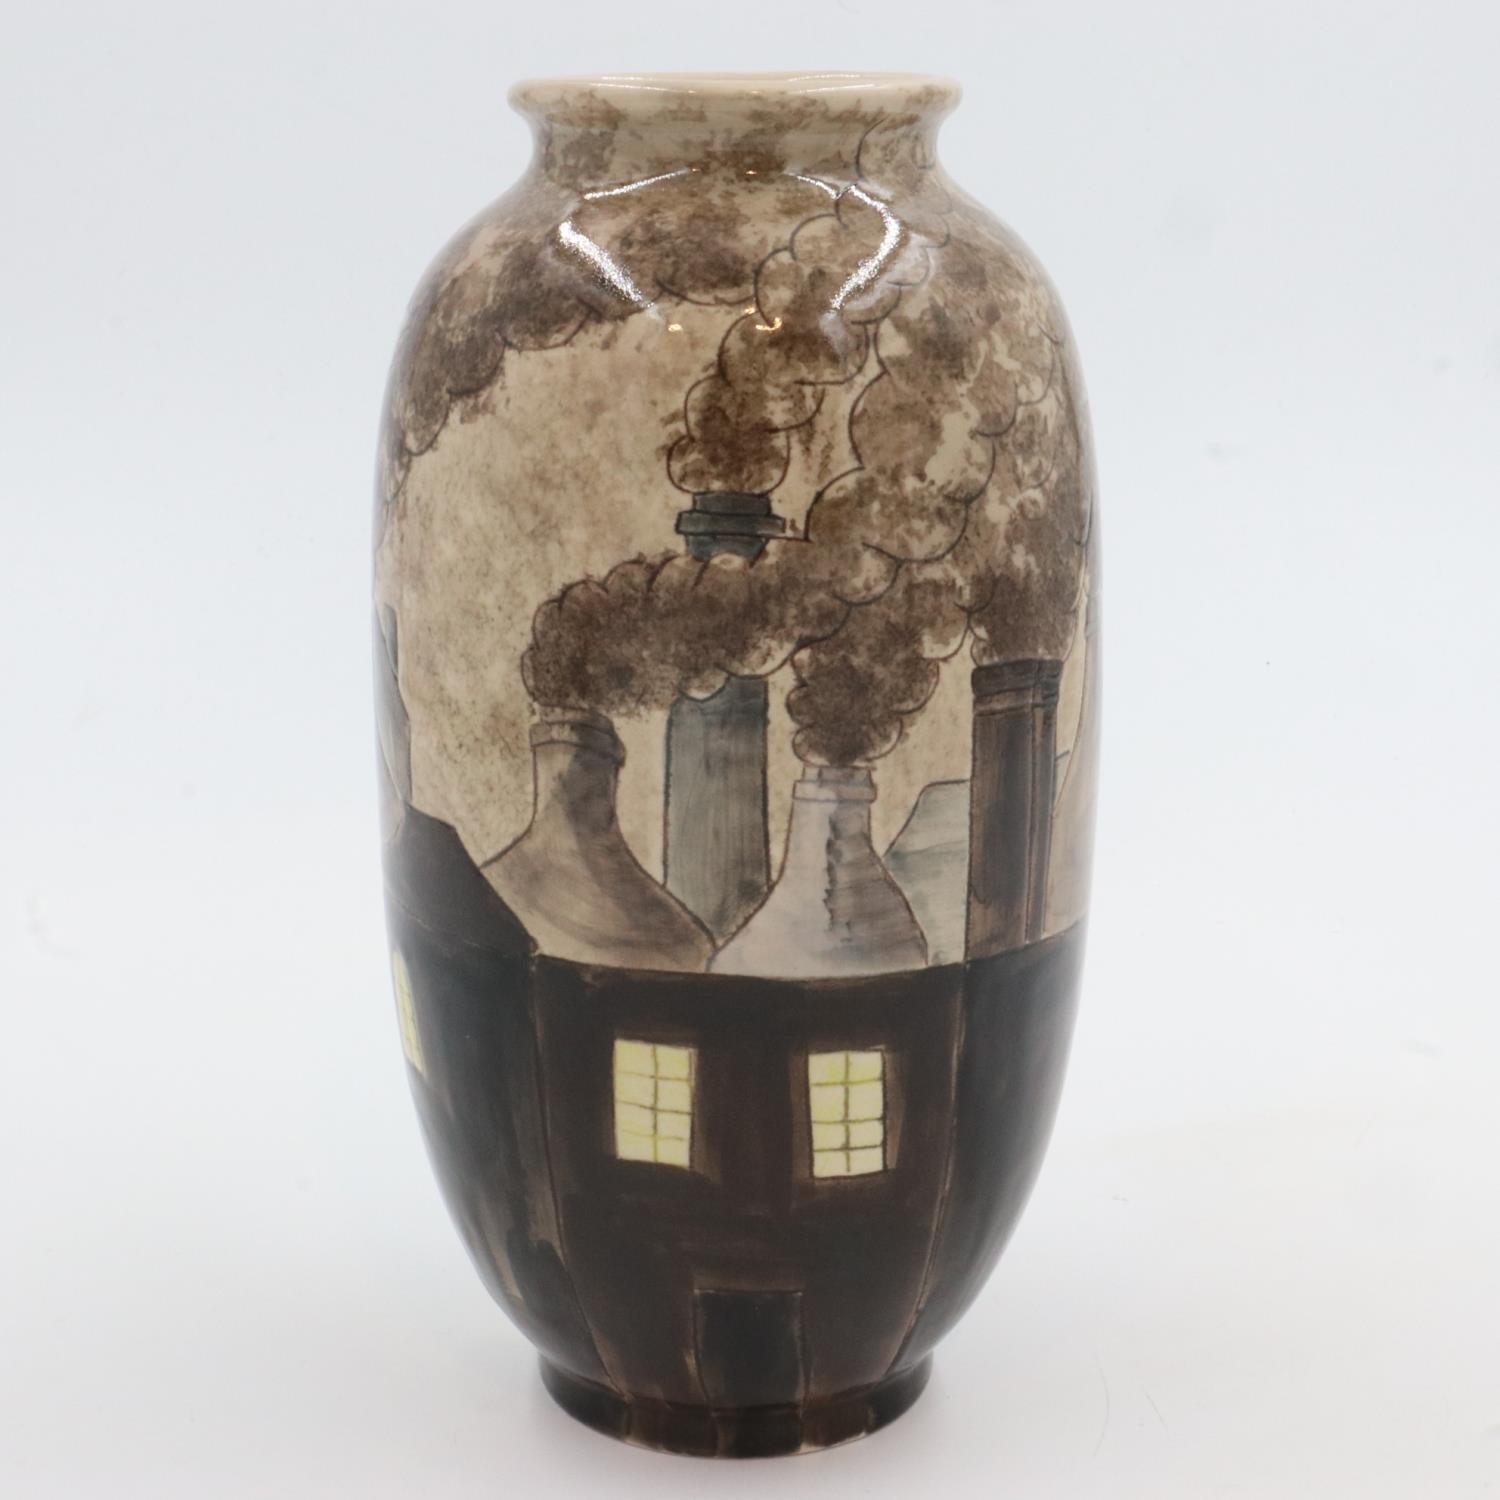 Cobridge Stoneware bottle oven vase,no cracks or chips. H: 22 cm. UK P&P Group 2 (£20+VAT for the